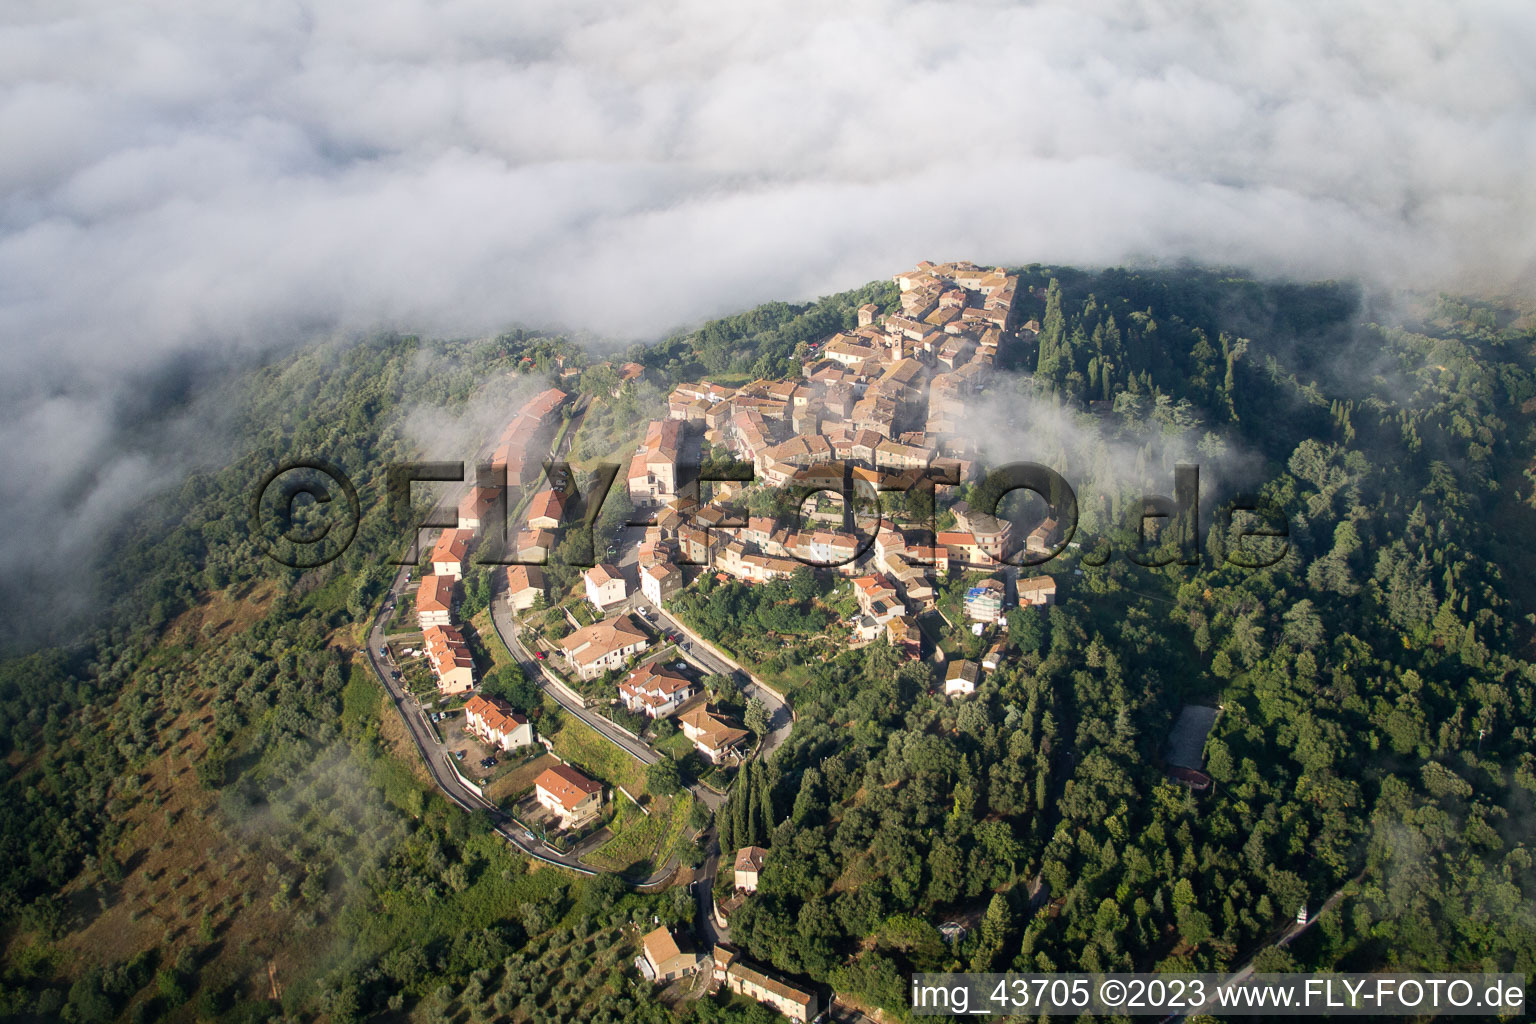 Oblique view of Civitella Marittima in the state Tuscany, Italy